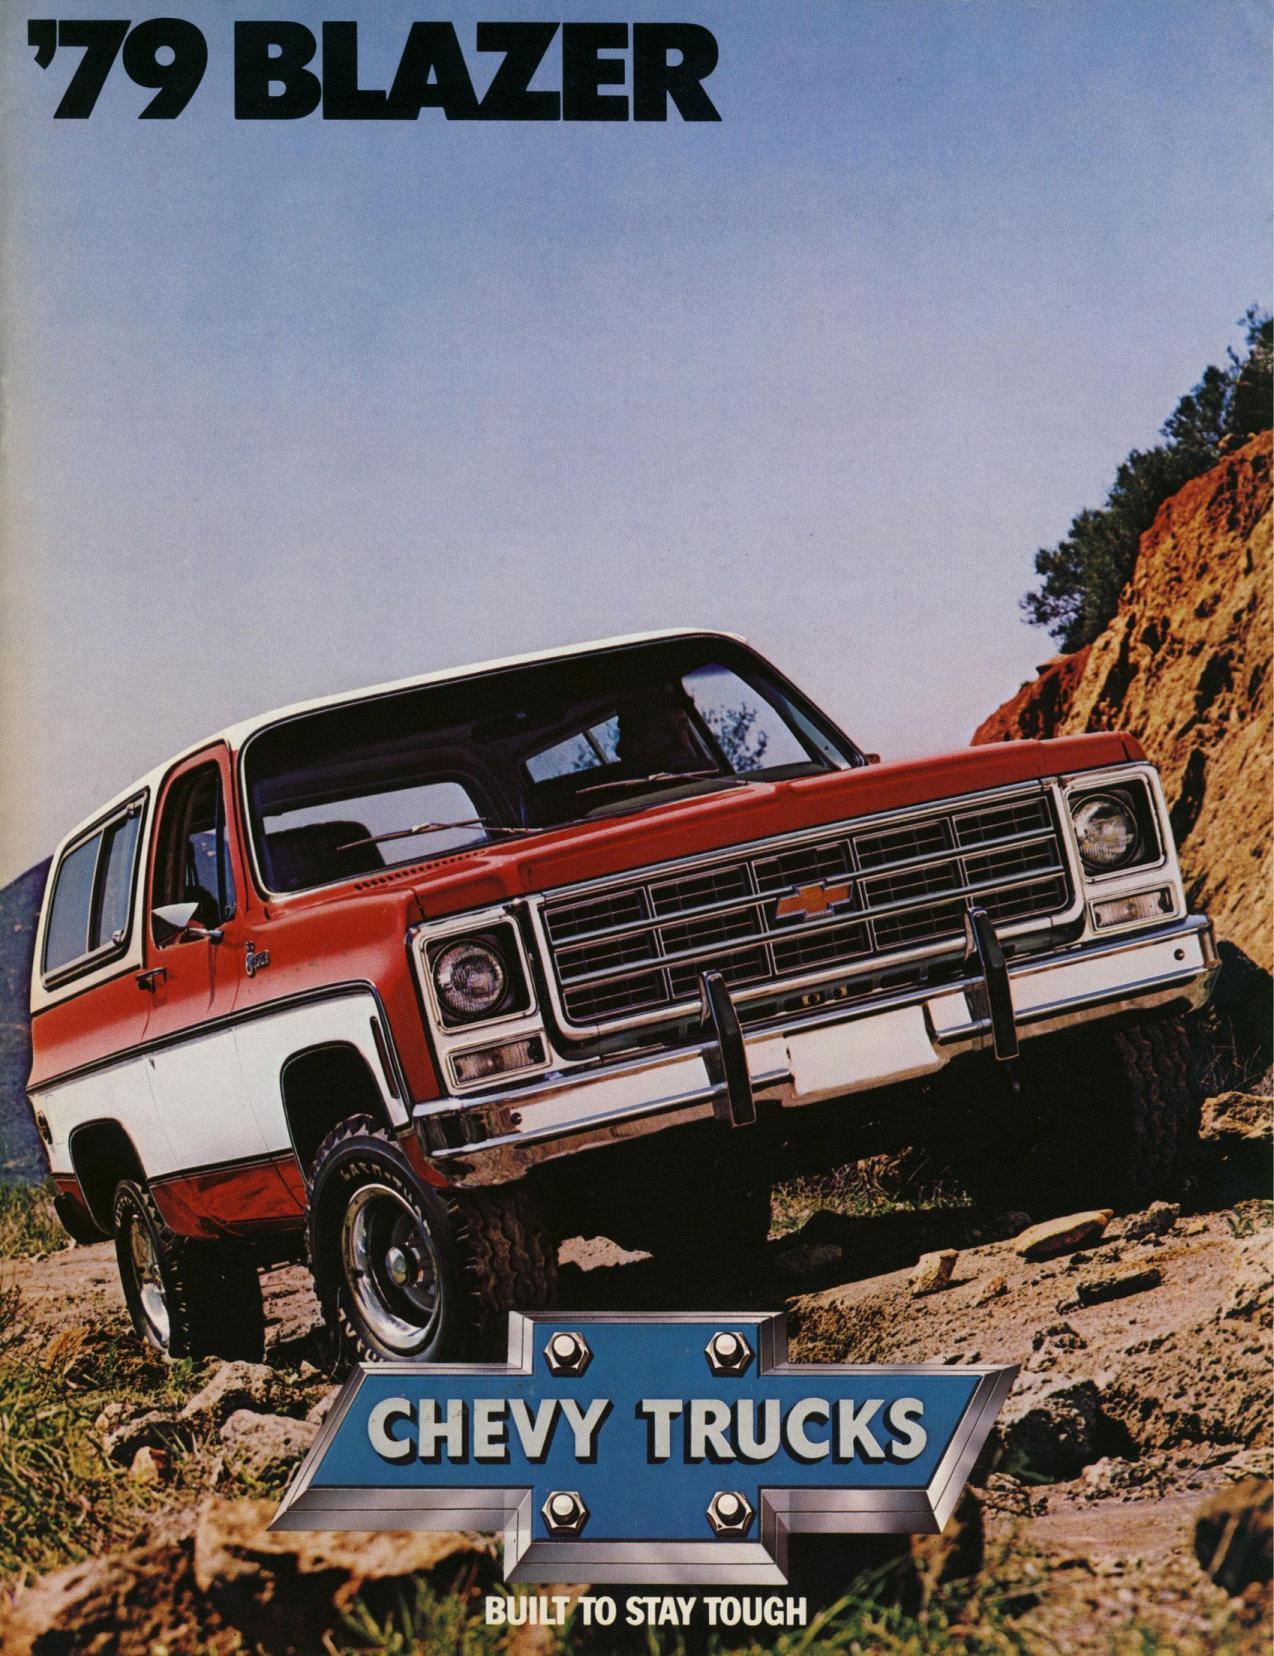 1979 Chevrolet Blazer Brochure